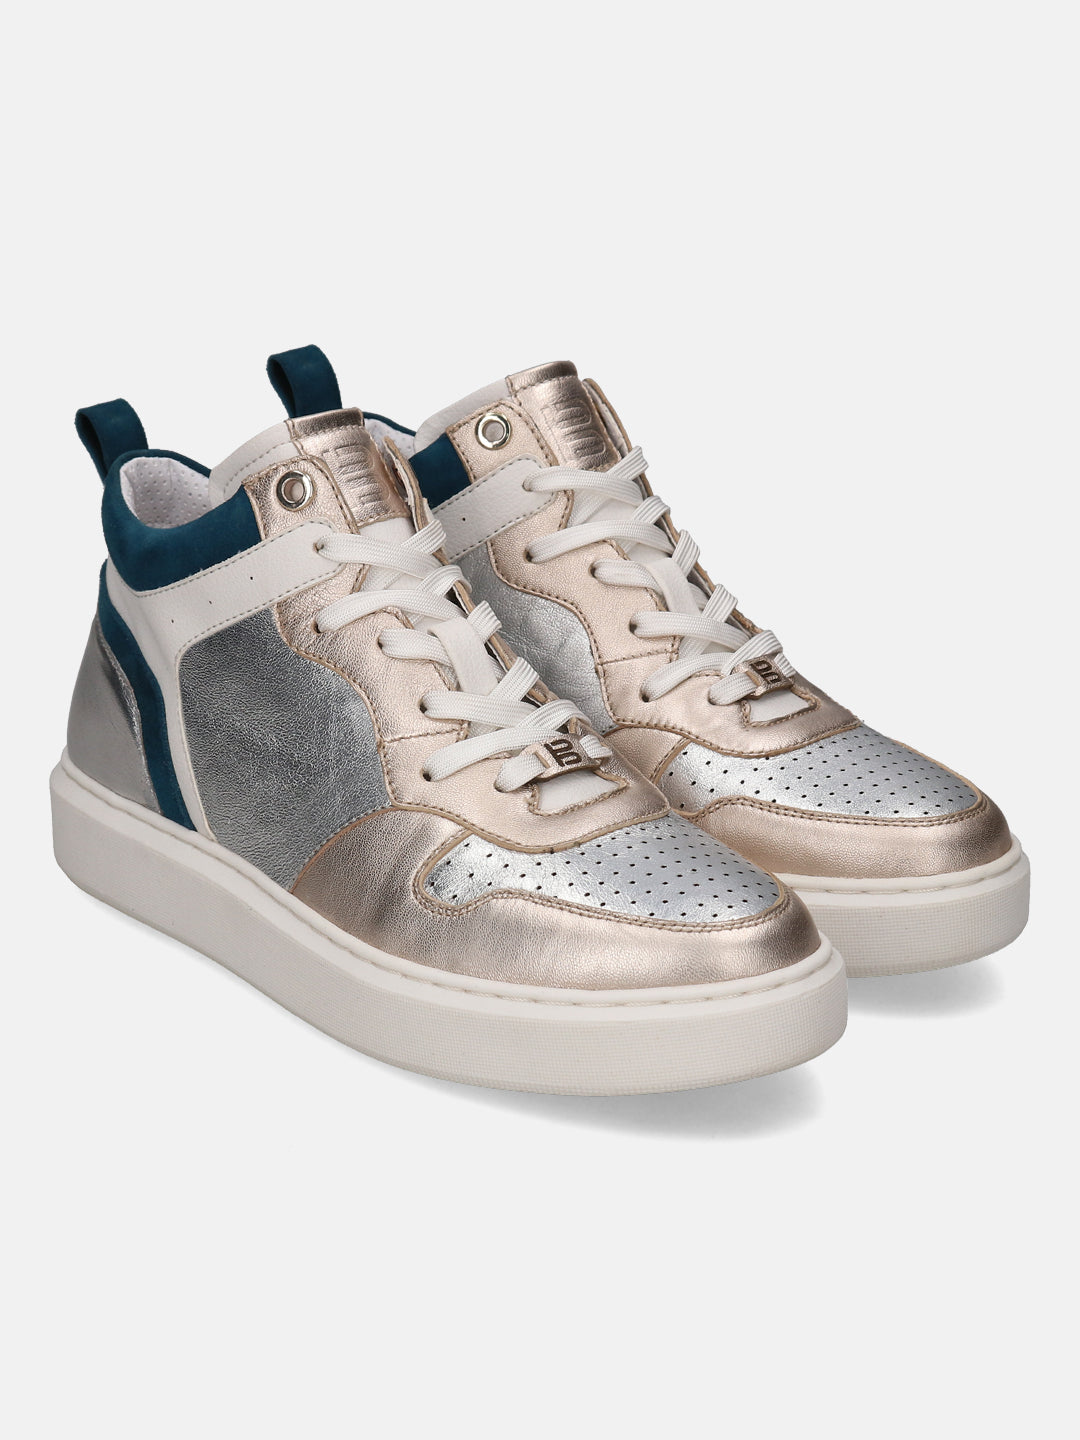 BAGATT Premium Leather Silver High Top Sneakers